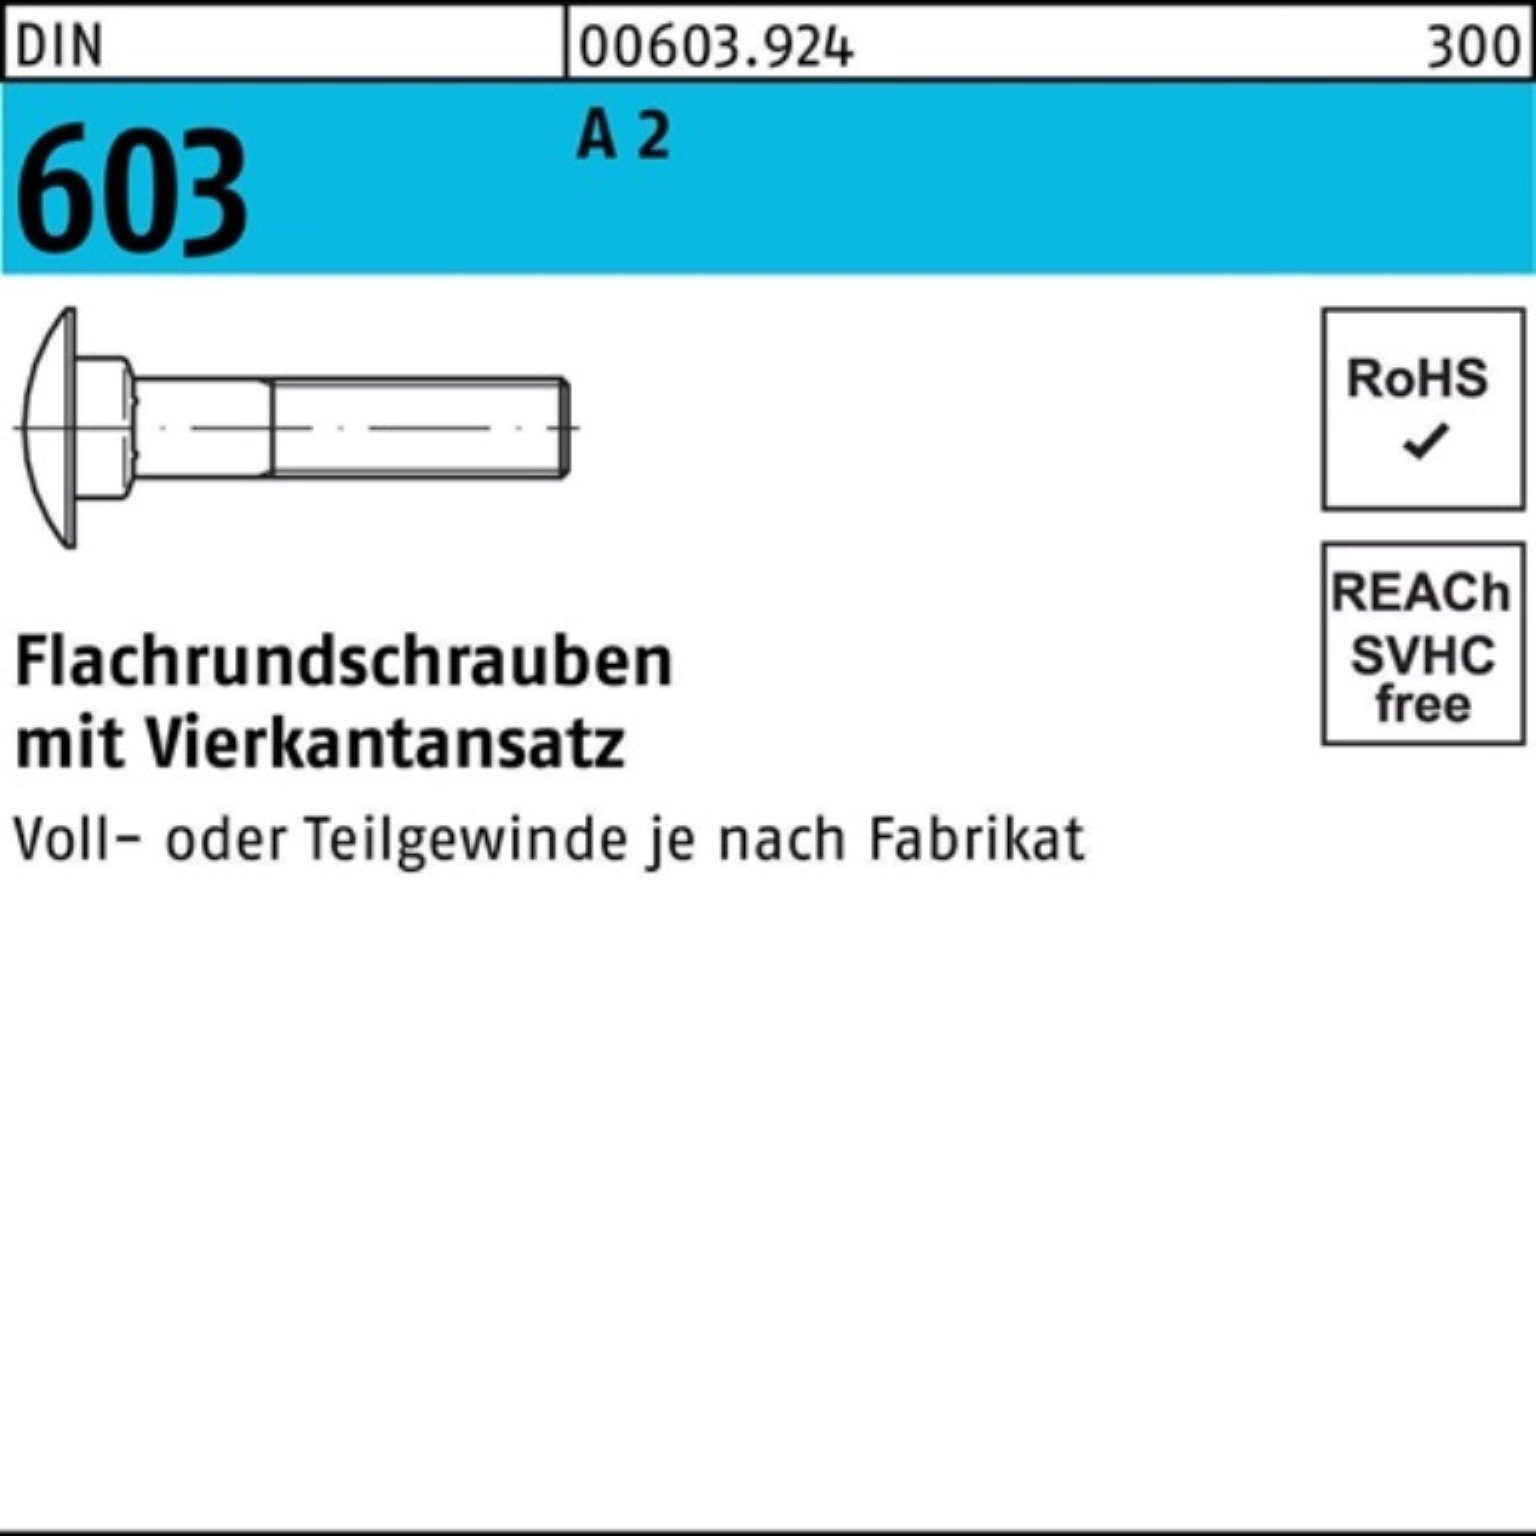 Reyher Schraube 100er Pack Flachrundschraube DIN 603 Vierkantansatz M8x 160 A 2 50 St